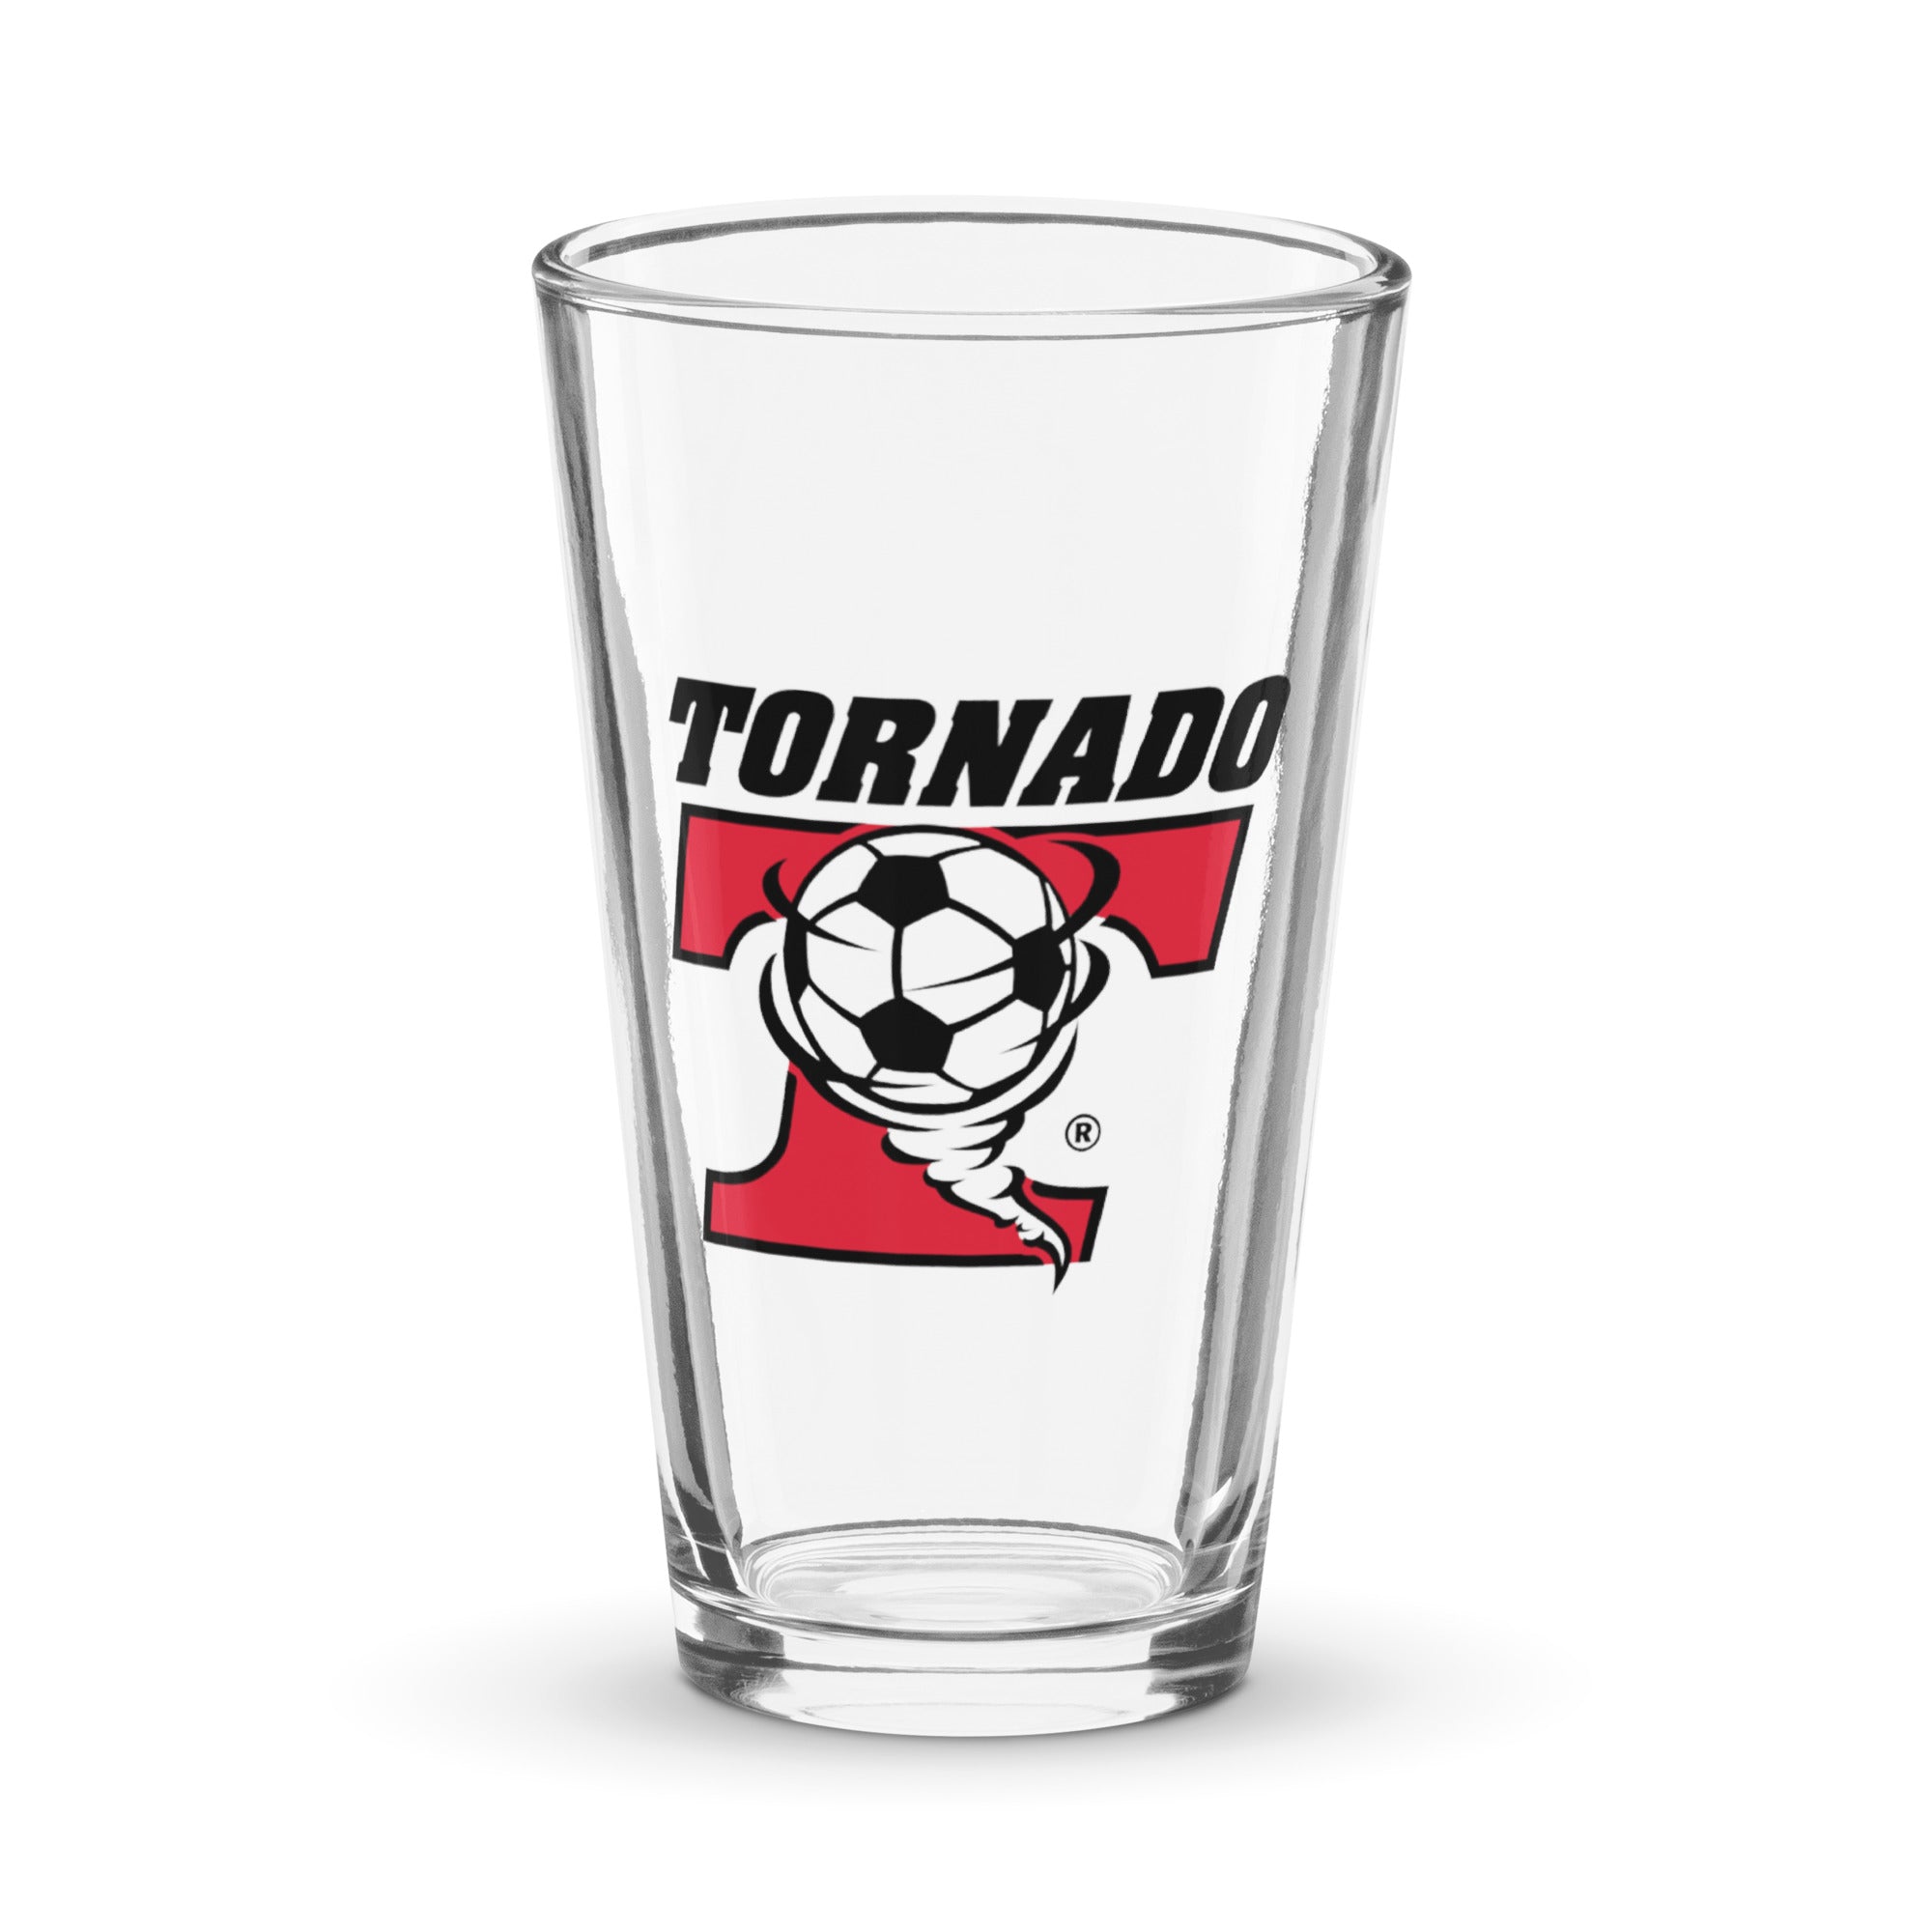 Tornado pint glass